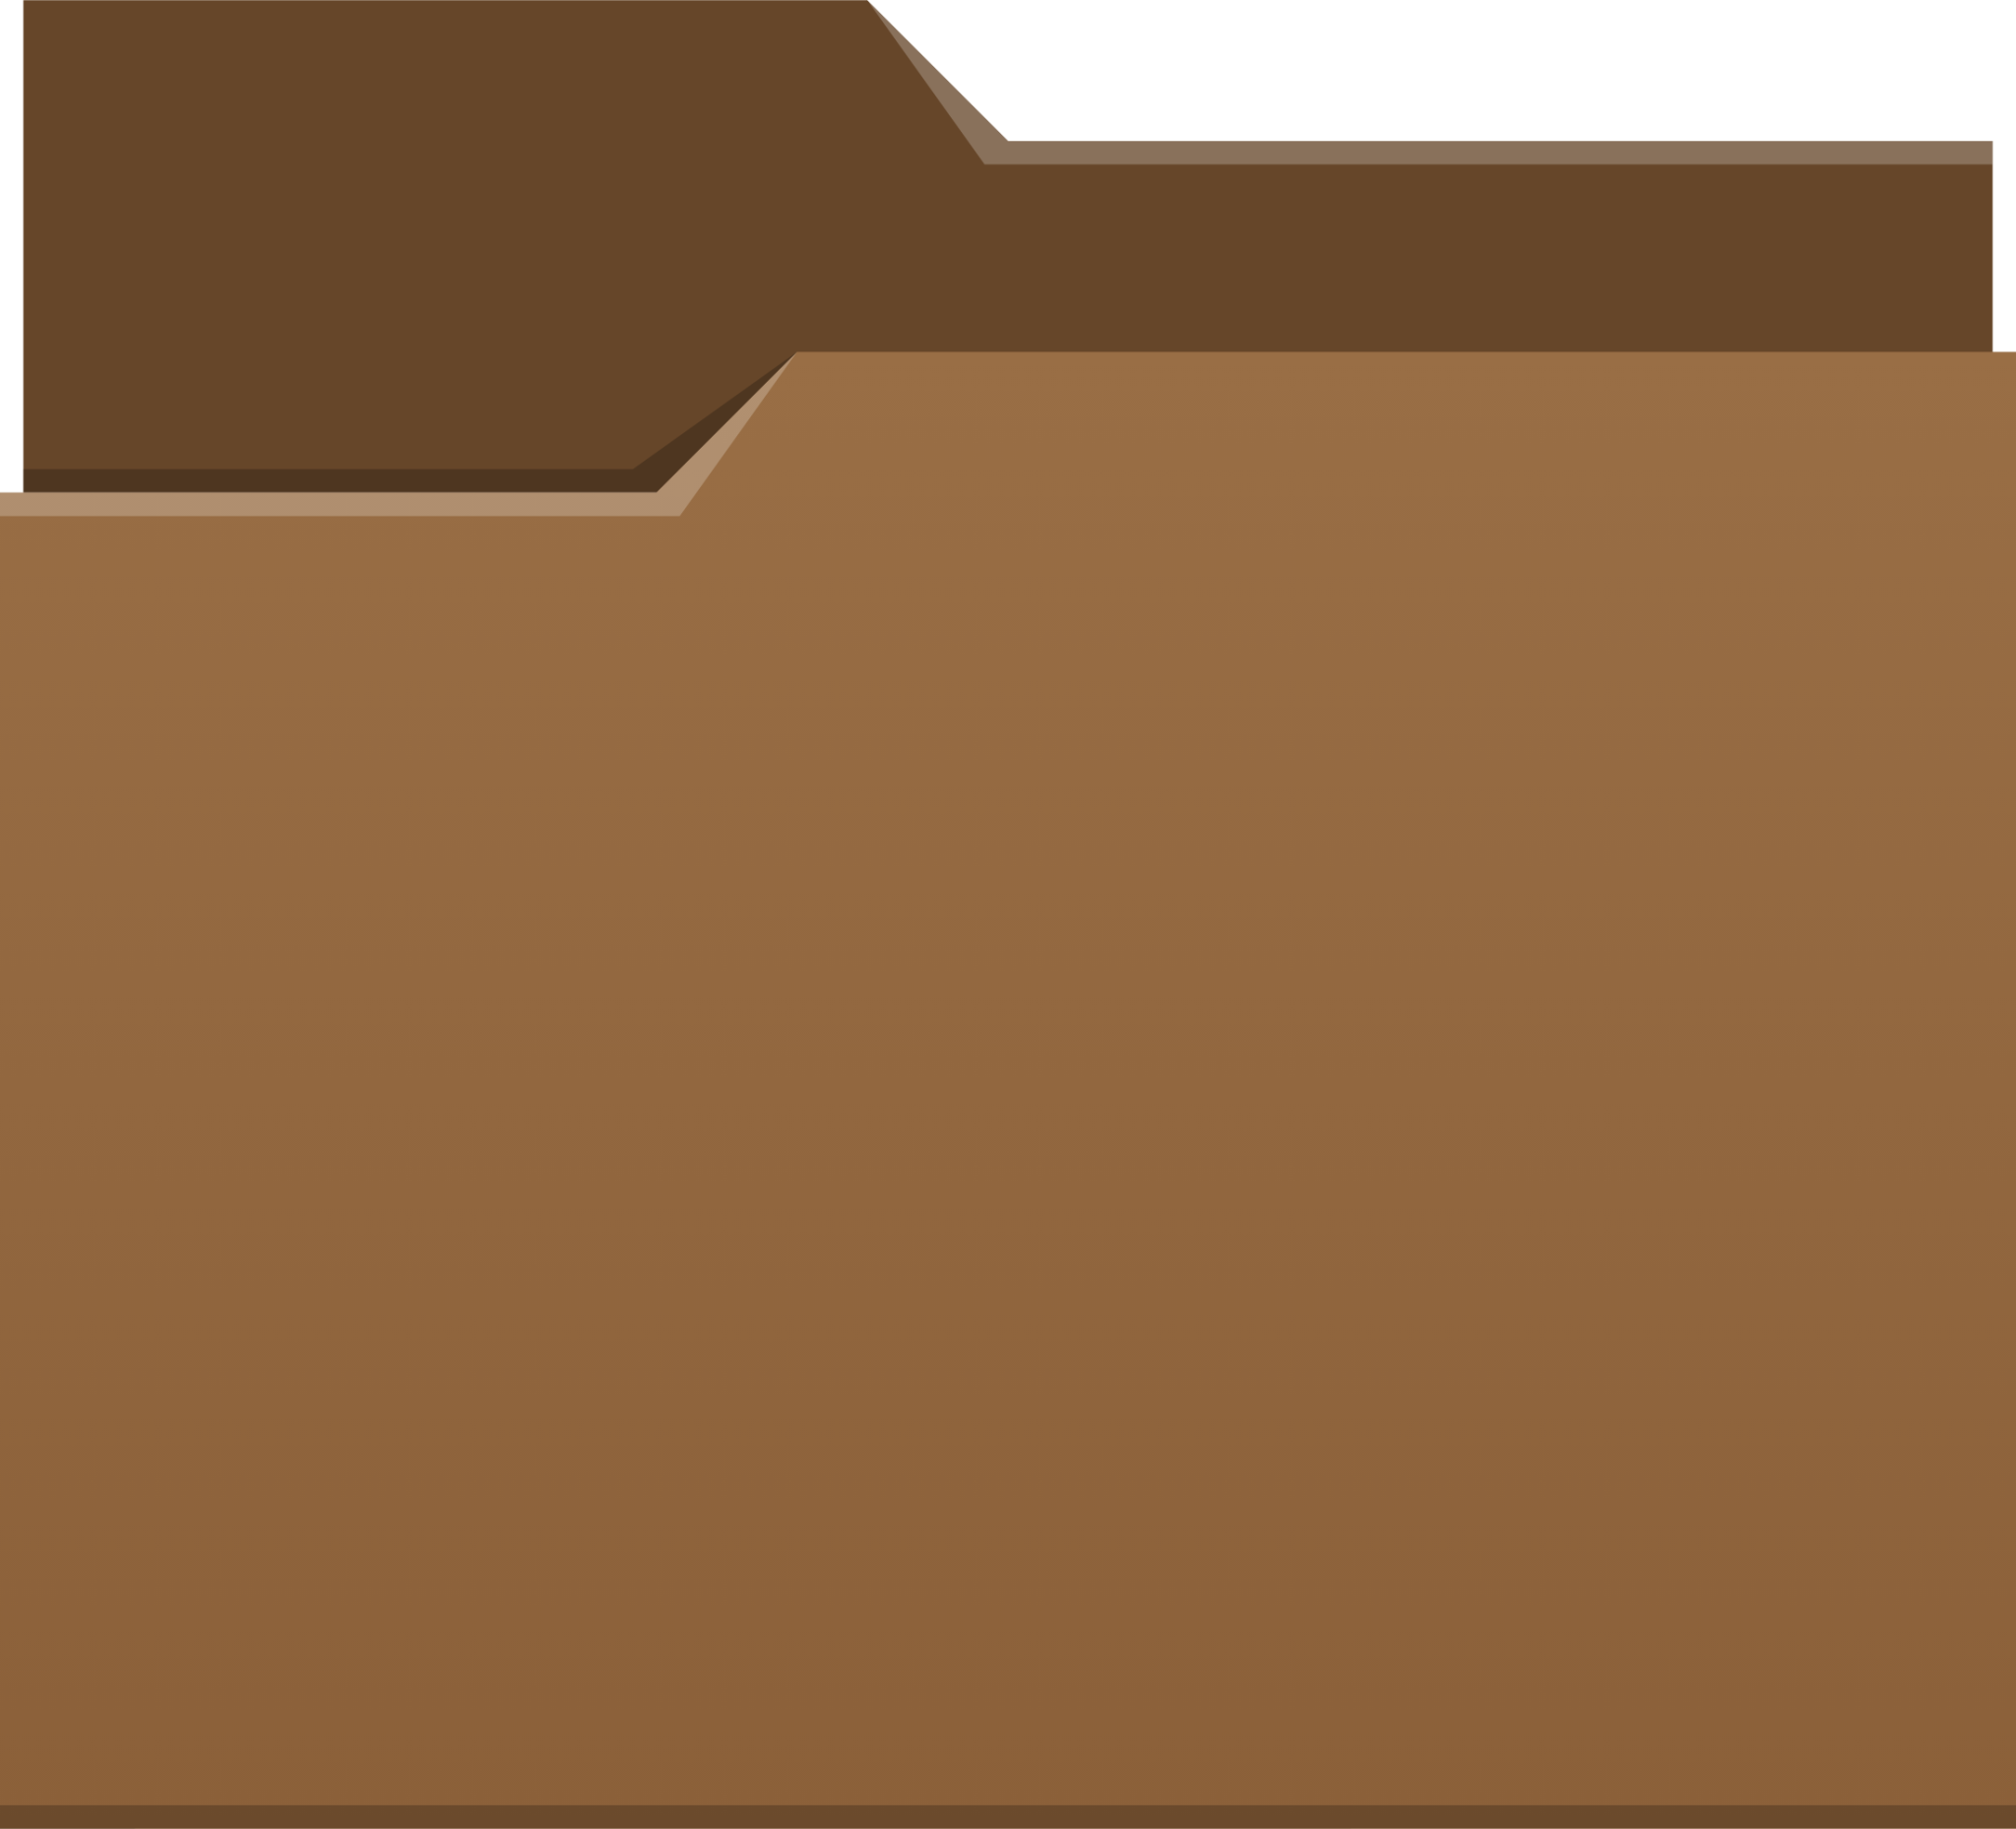 folder brown icon